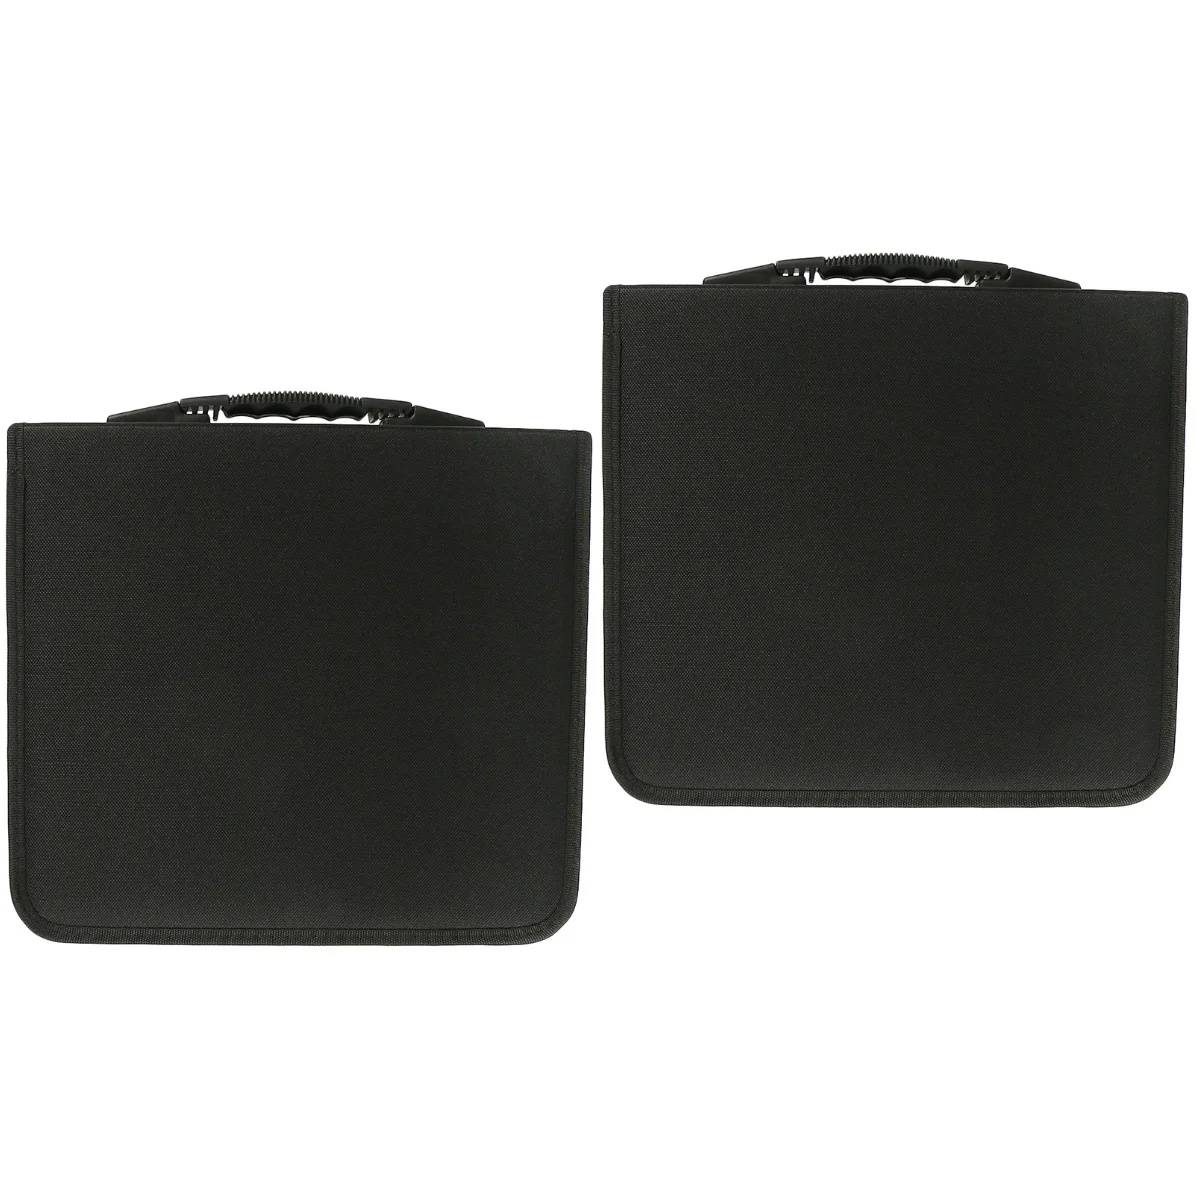 2pcs 320 Discs Portable CD DVD Wallet Holder Bag Case Album Organizer Media Storage Box(Black)